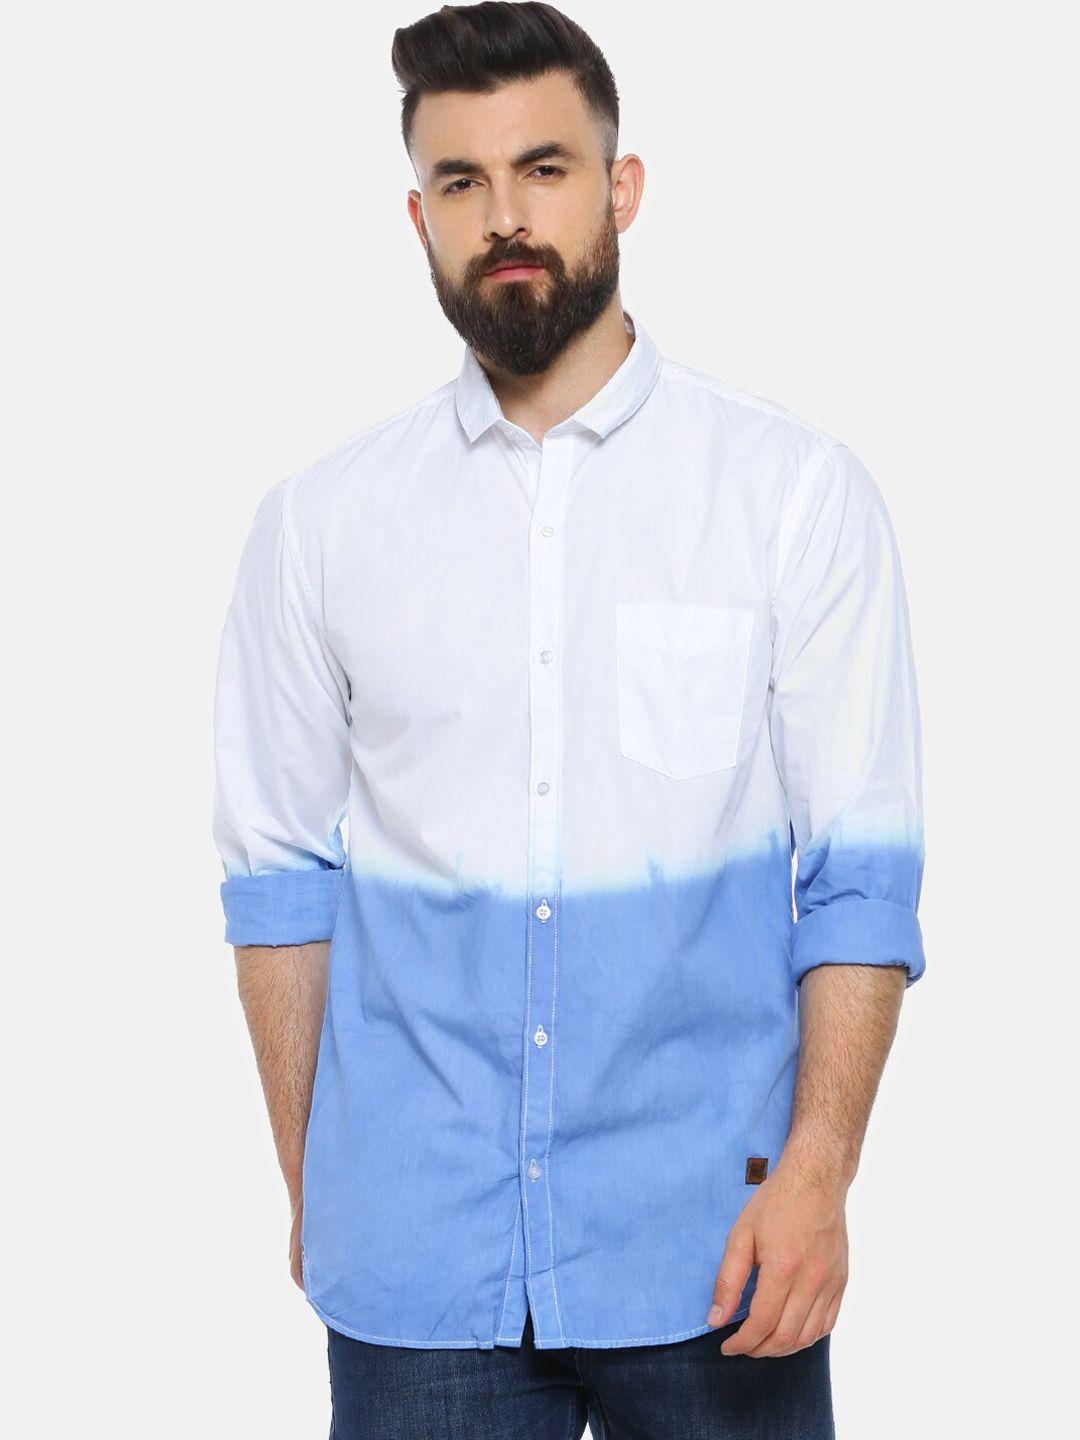 campus sutra men white & blue regular fit colourblocked casual shirt